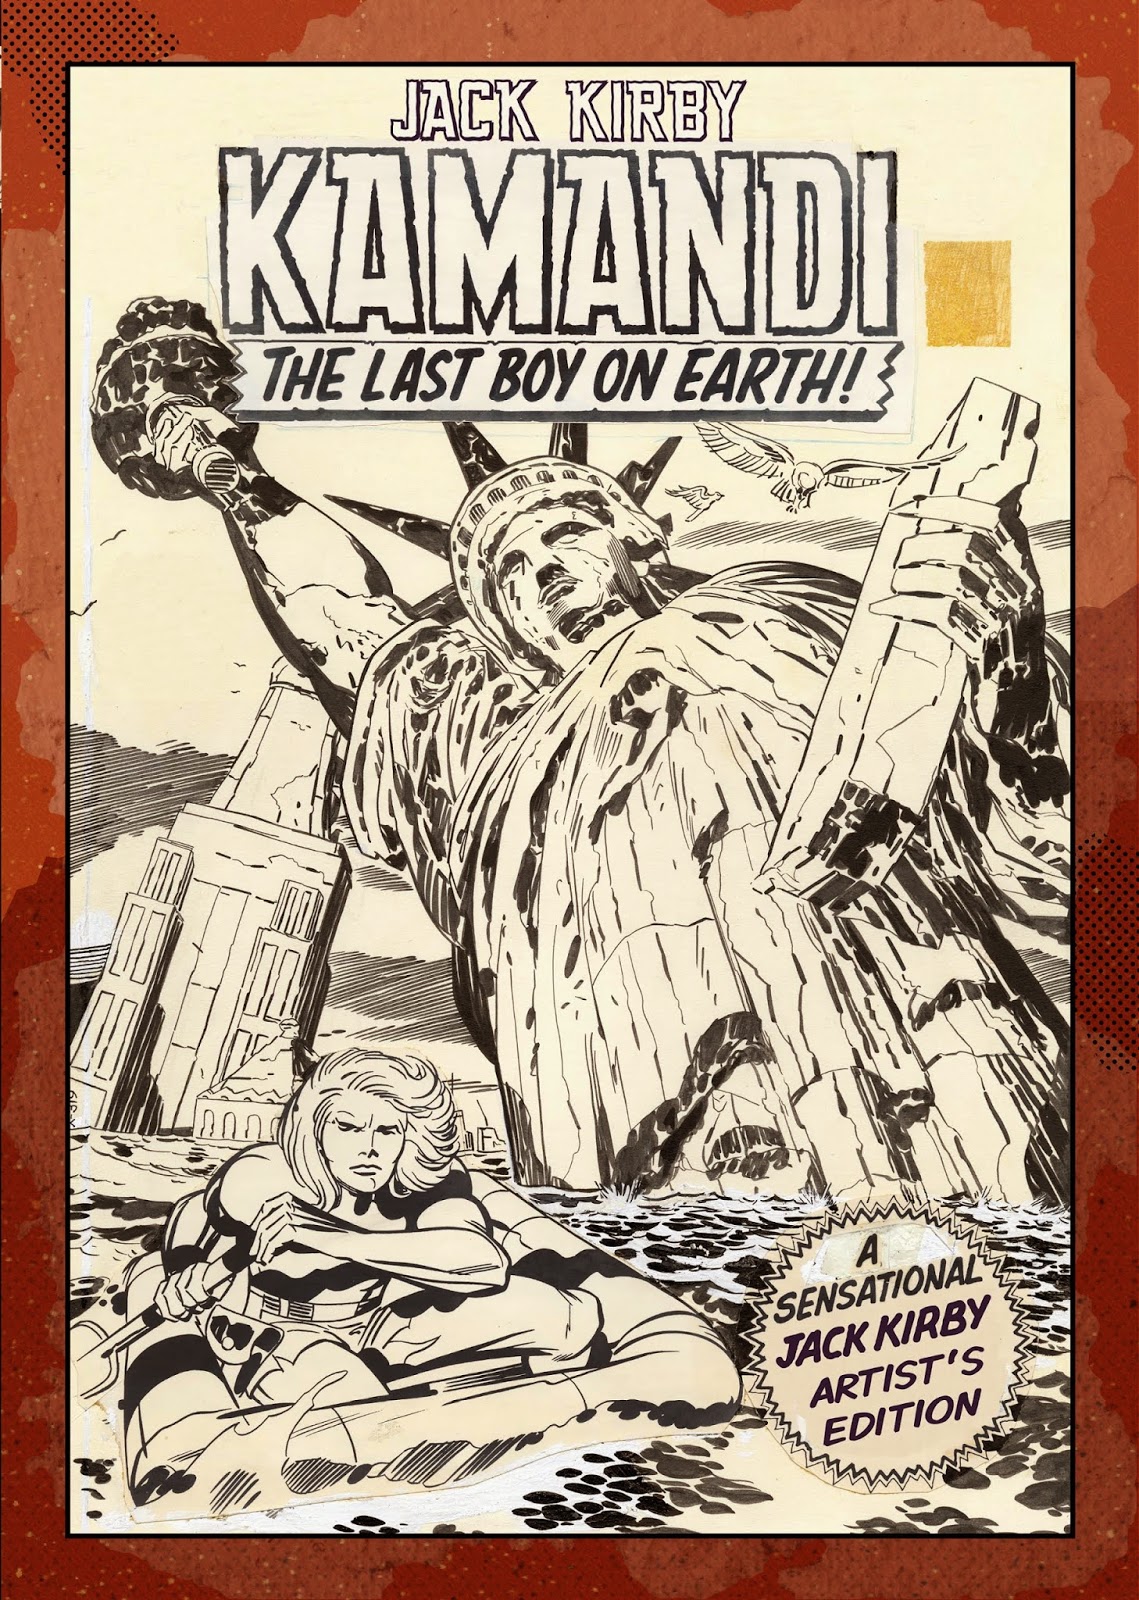 Kamandi - Jack Kirby - Artist's Edition